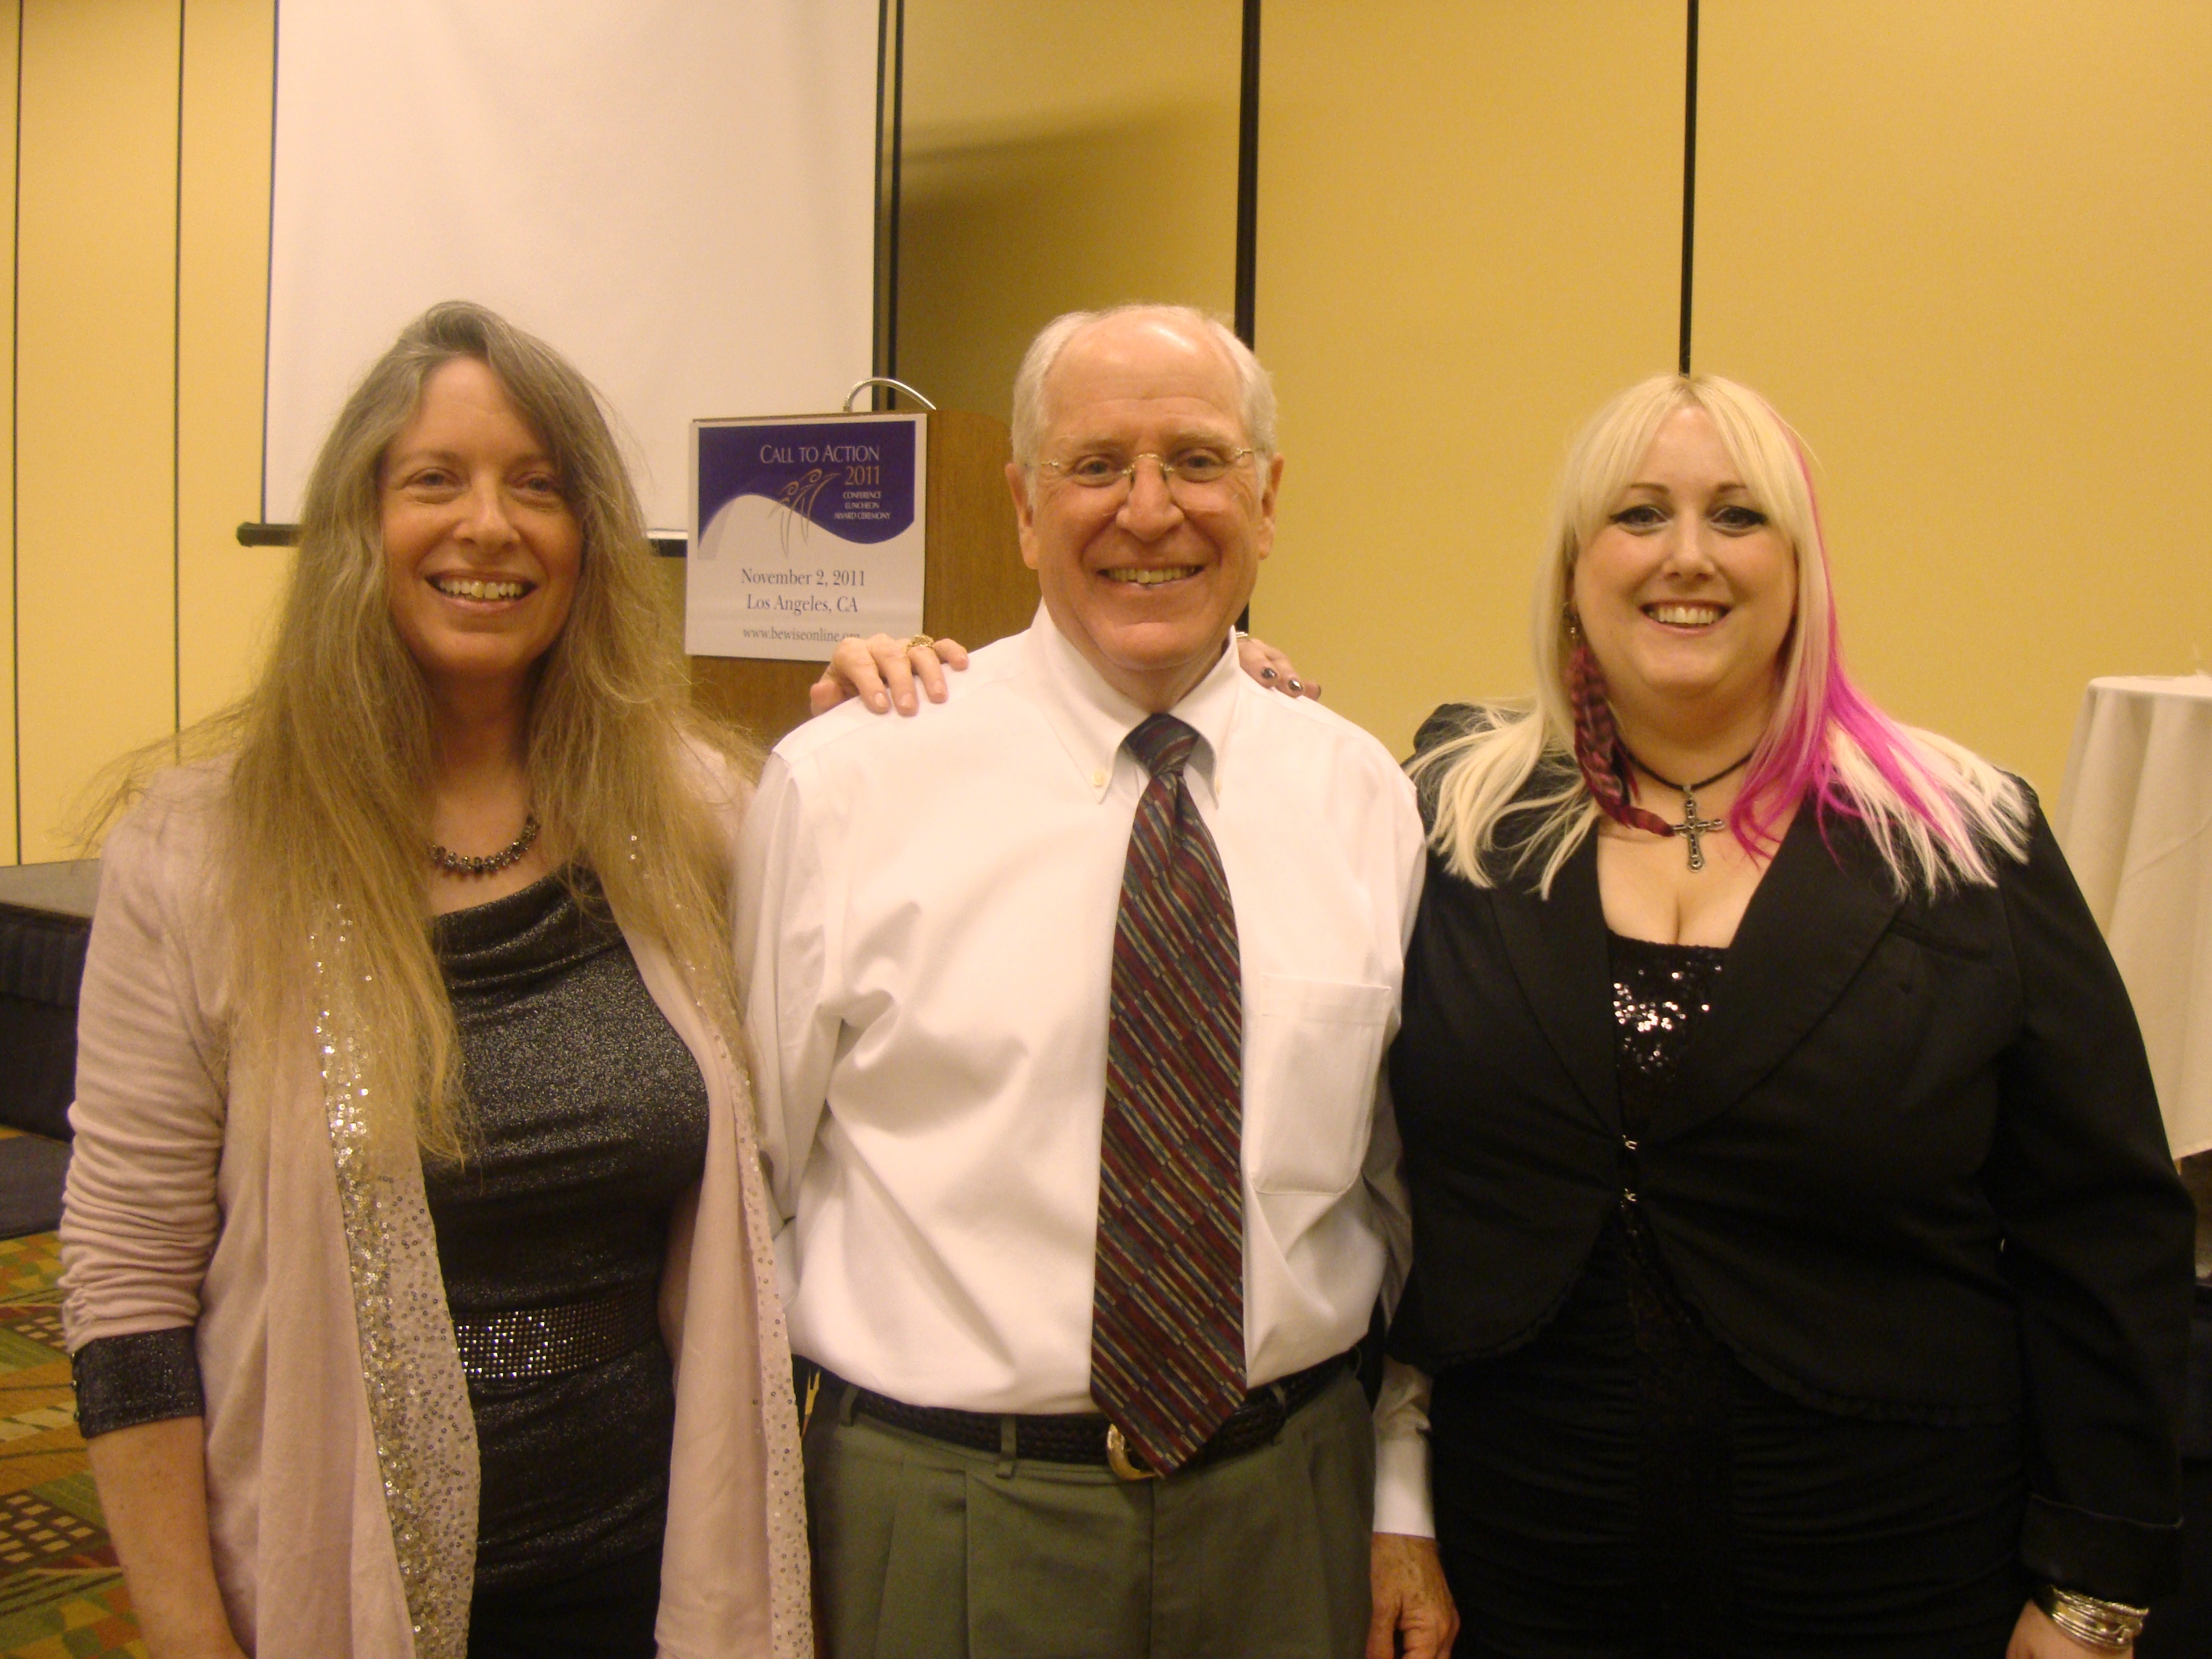 Pamela Glasner and Deborah Robinson with former senator Skip Humphrey at EFPN luncheon, Hollywood, 2 Nov. 2011